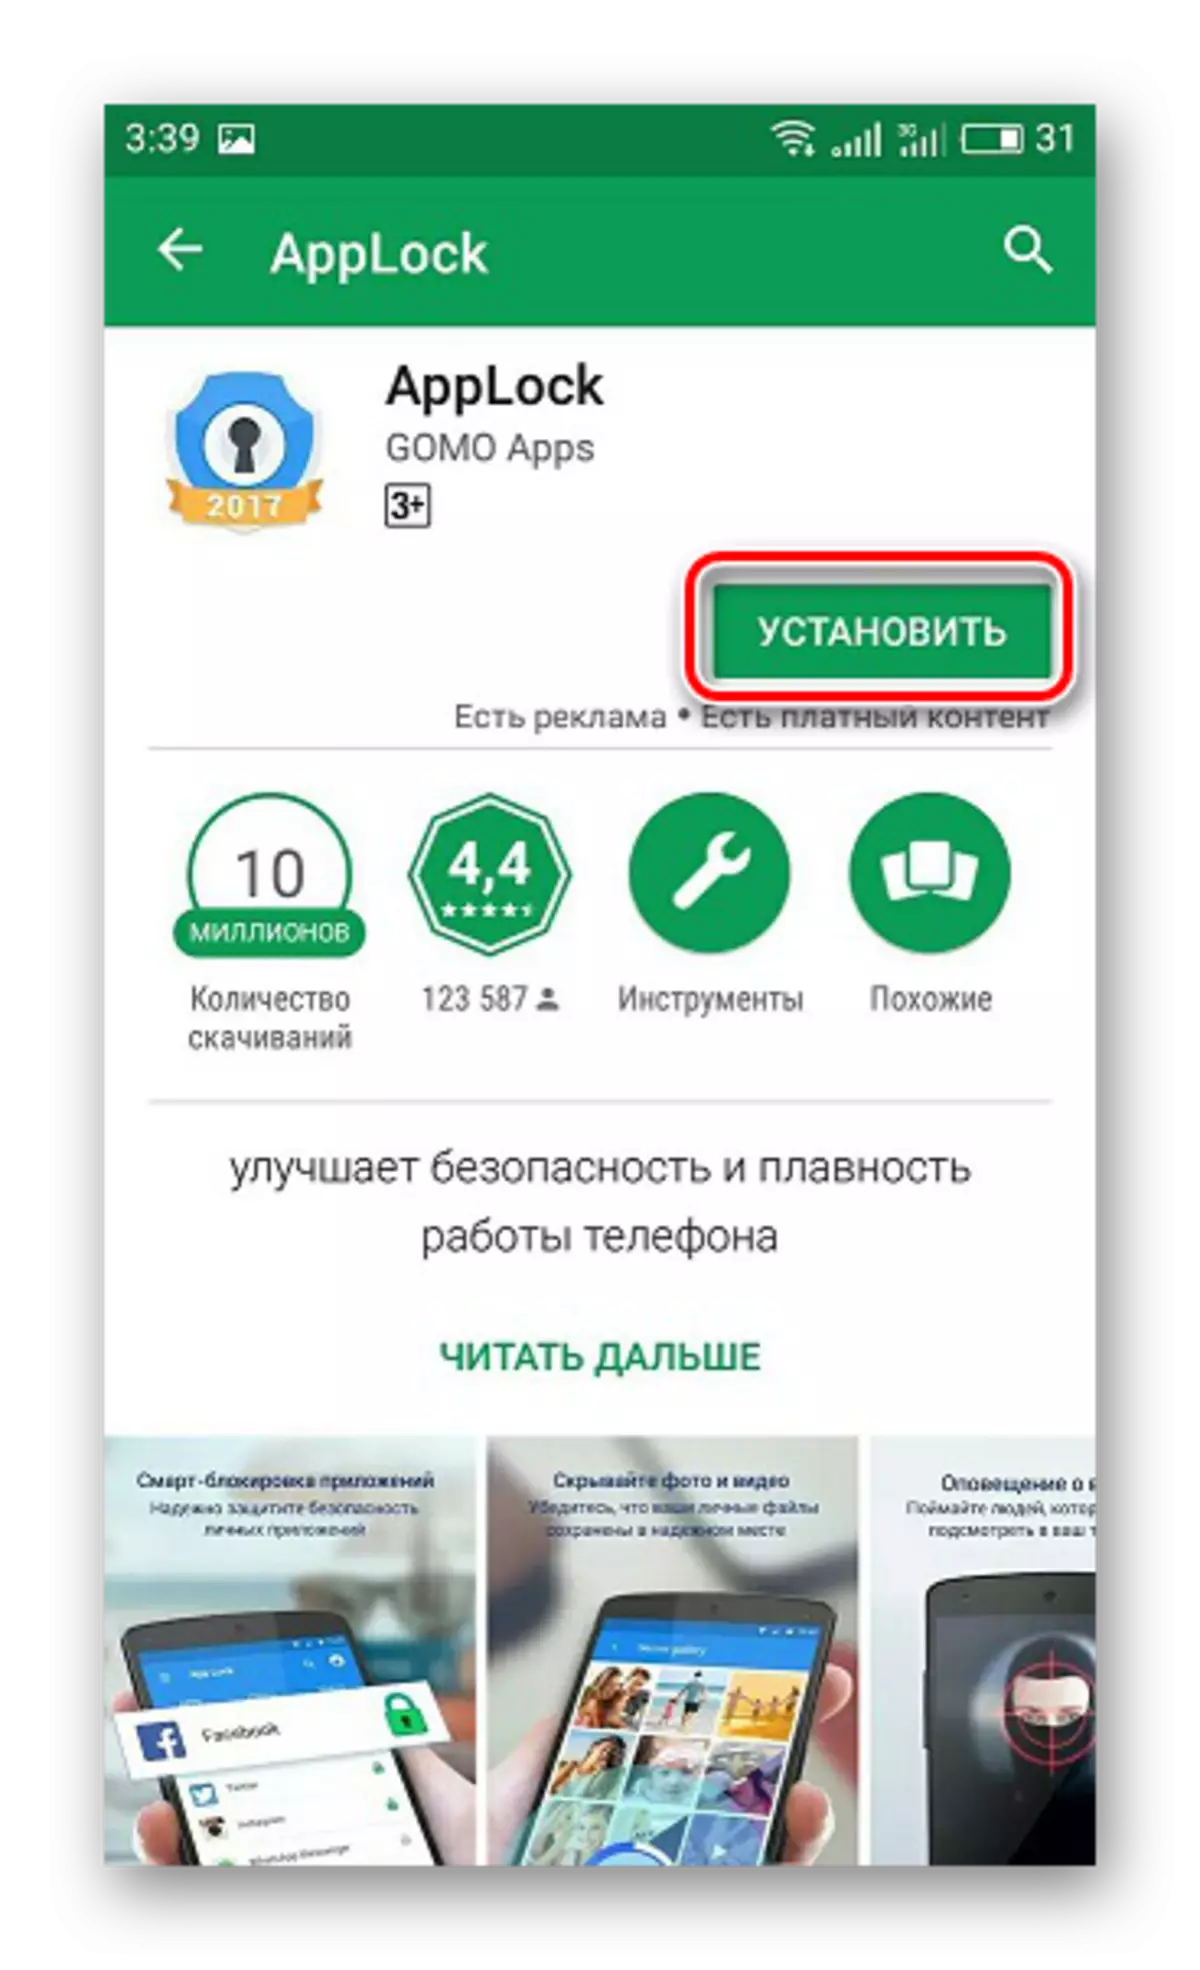 Eroflueden Applock mam Google Play Market